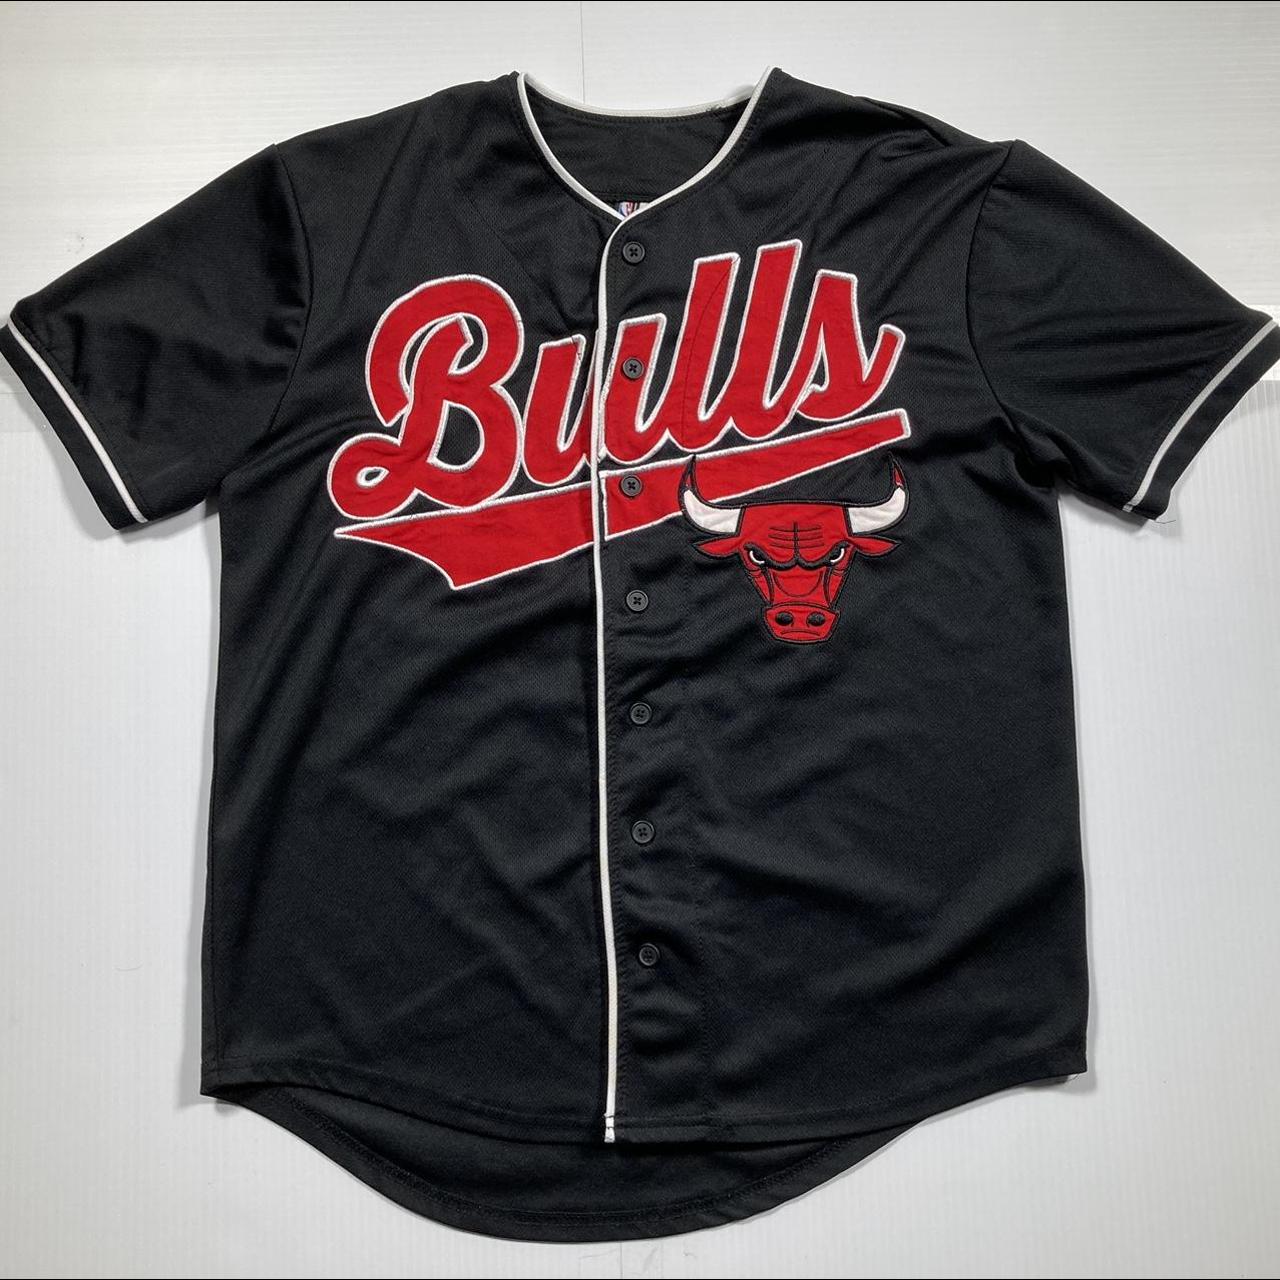 Chicago Bulls Baseball Jersey, Men's Fashion, Tops & Sets, Tshirts